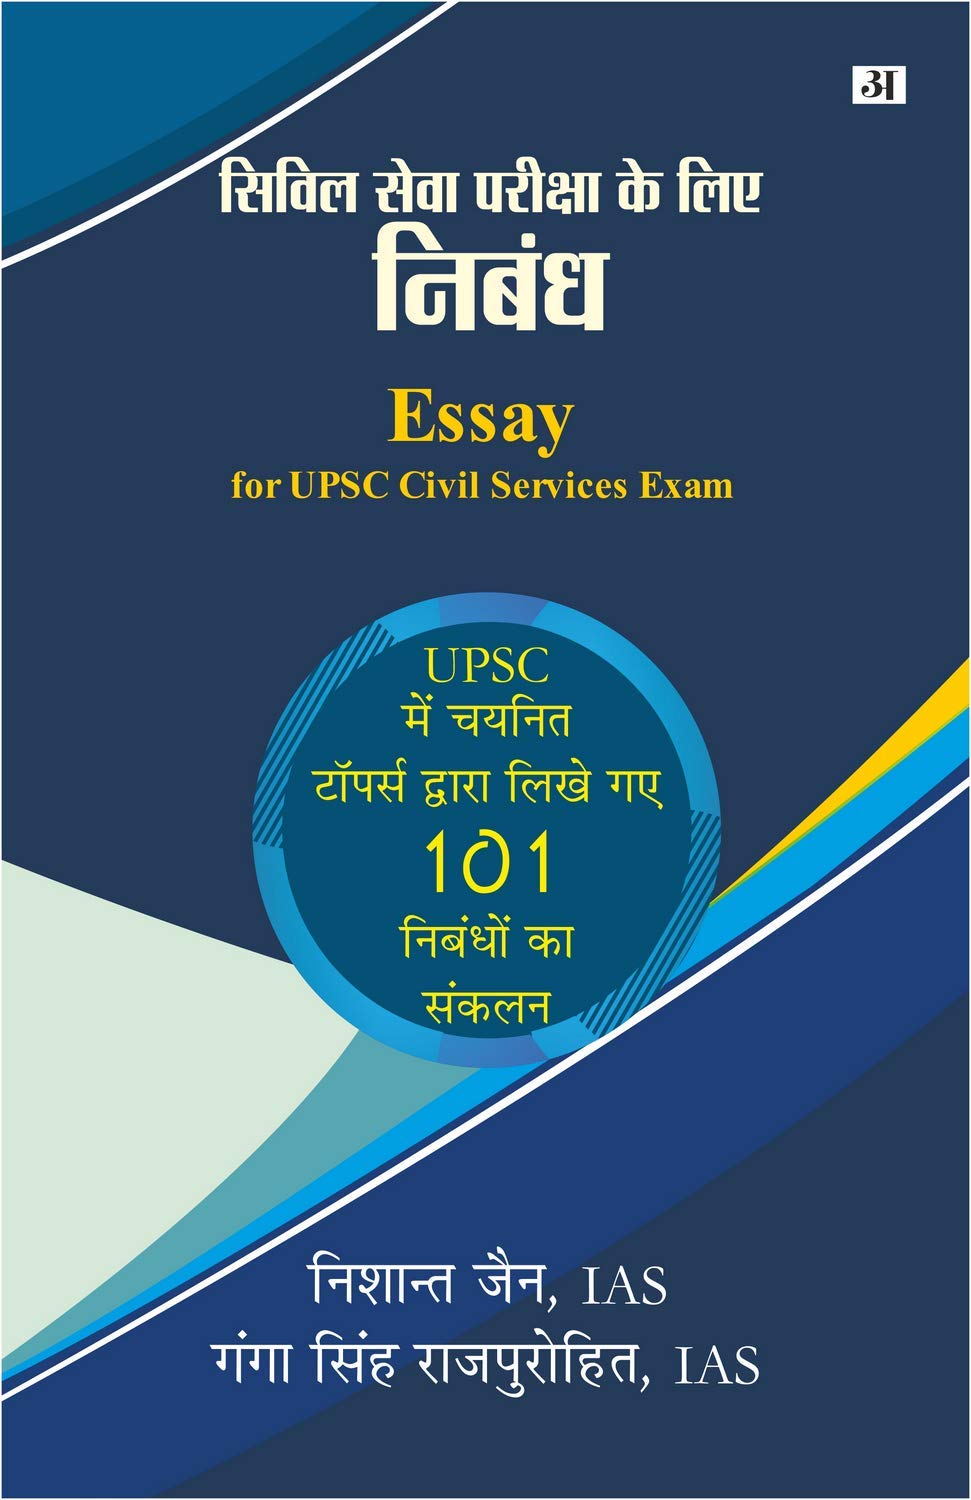 nishant jain essay book pdf download